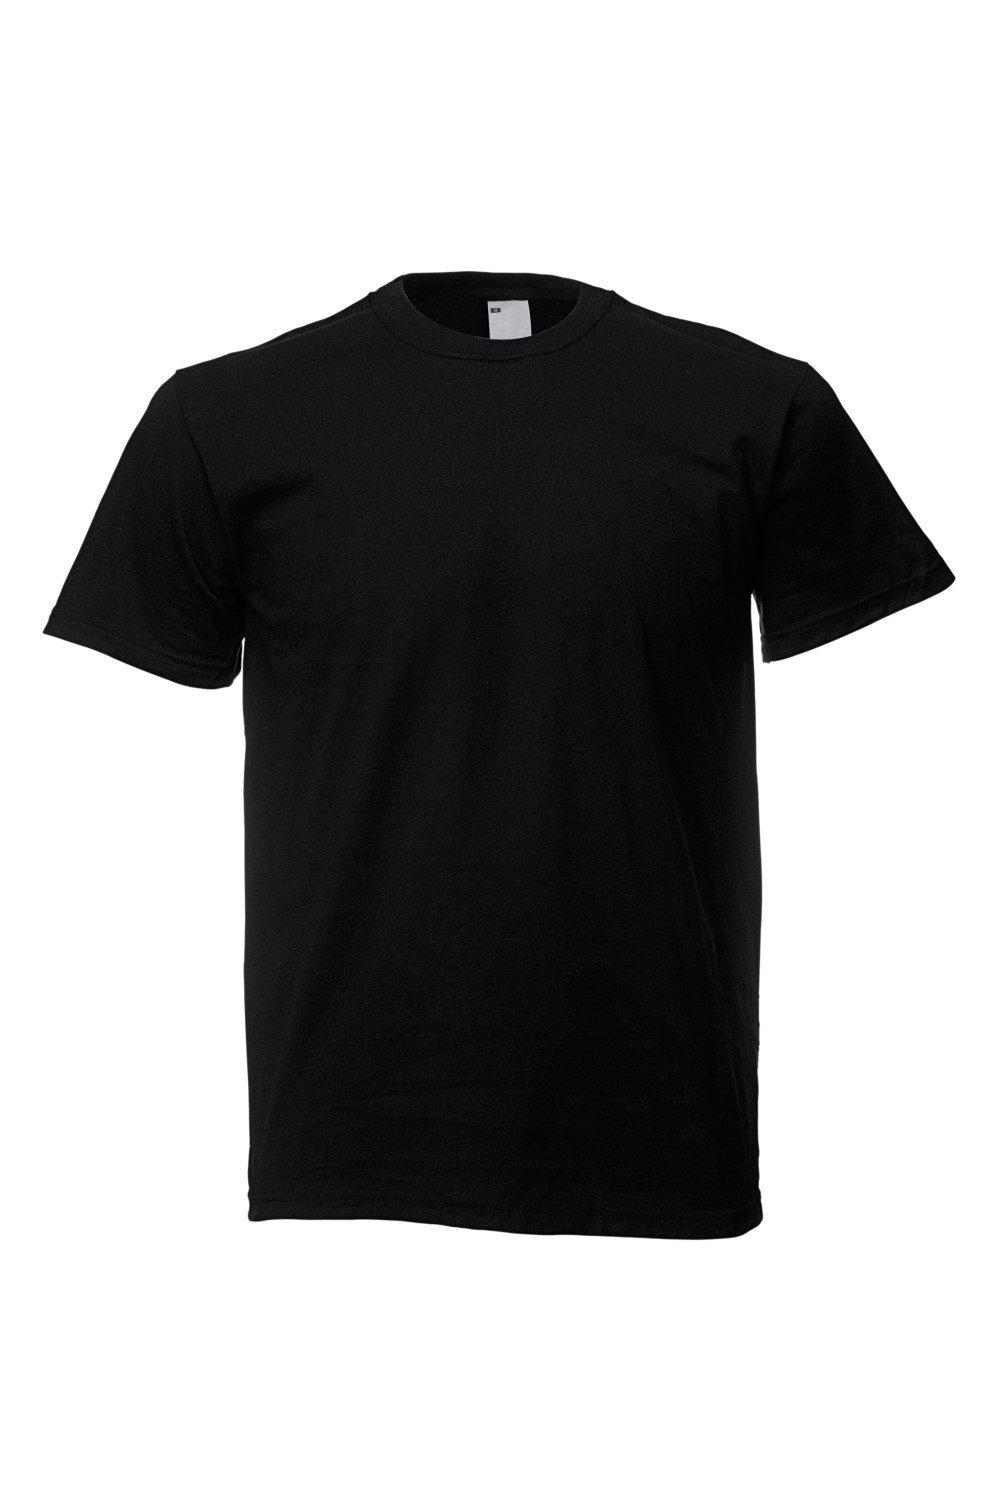 Повседневная футболка с коротким рукавом Universal Textiles, черный повседневная футболка с коротким рукавом universal textiles синий